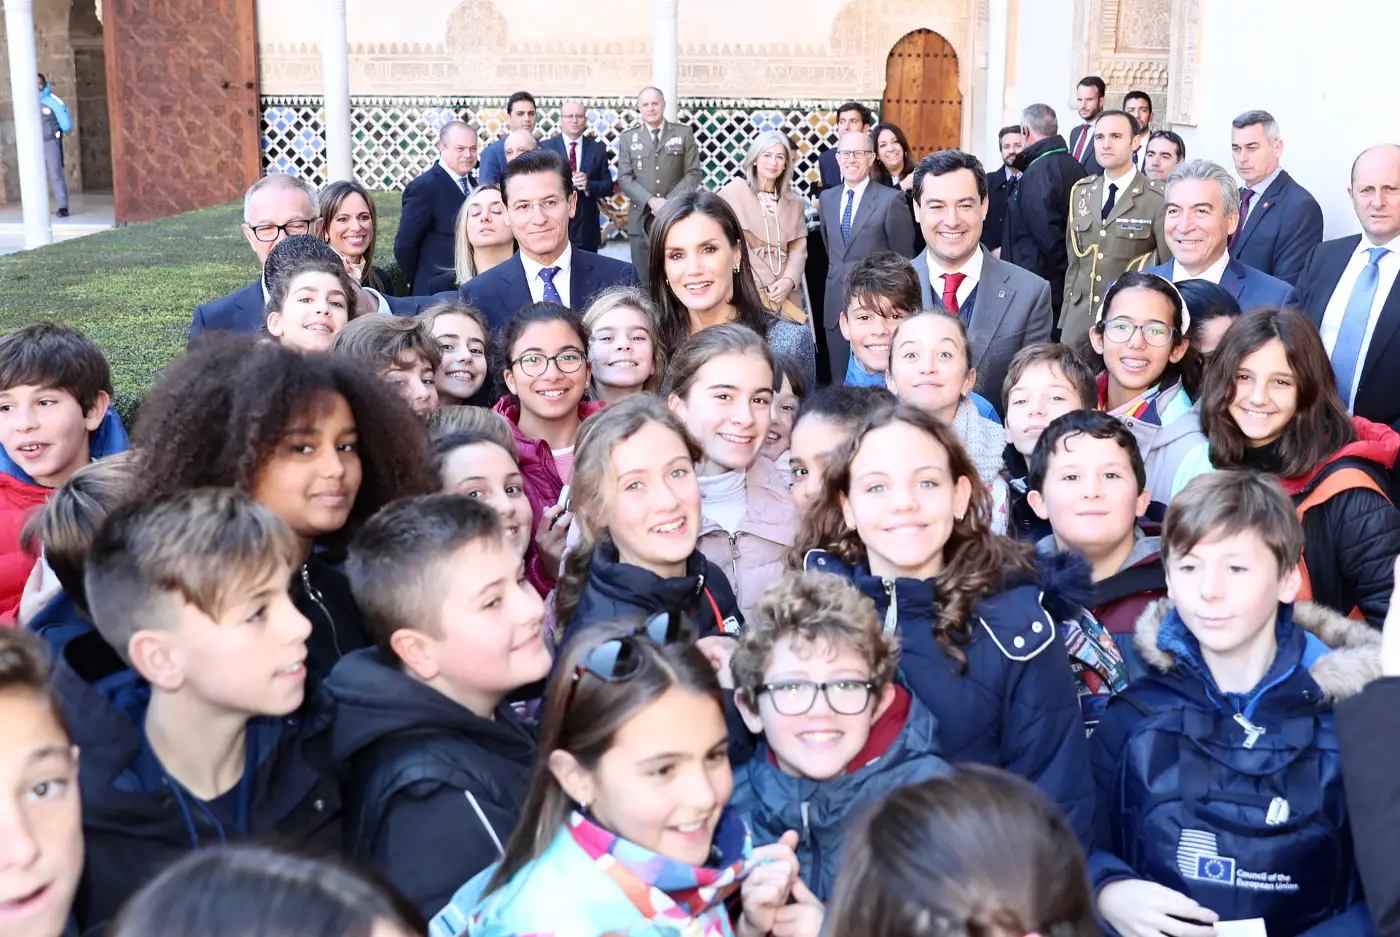 Queen Letizia of Spain in Granada